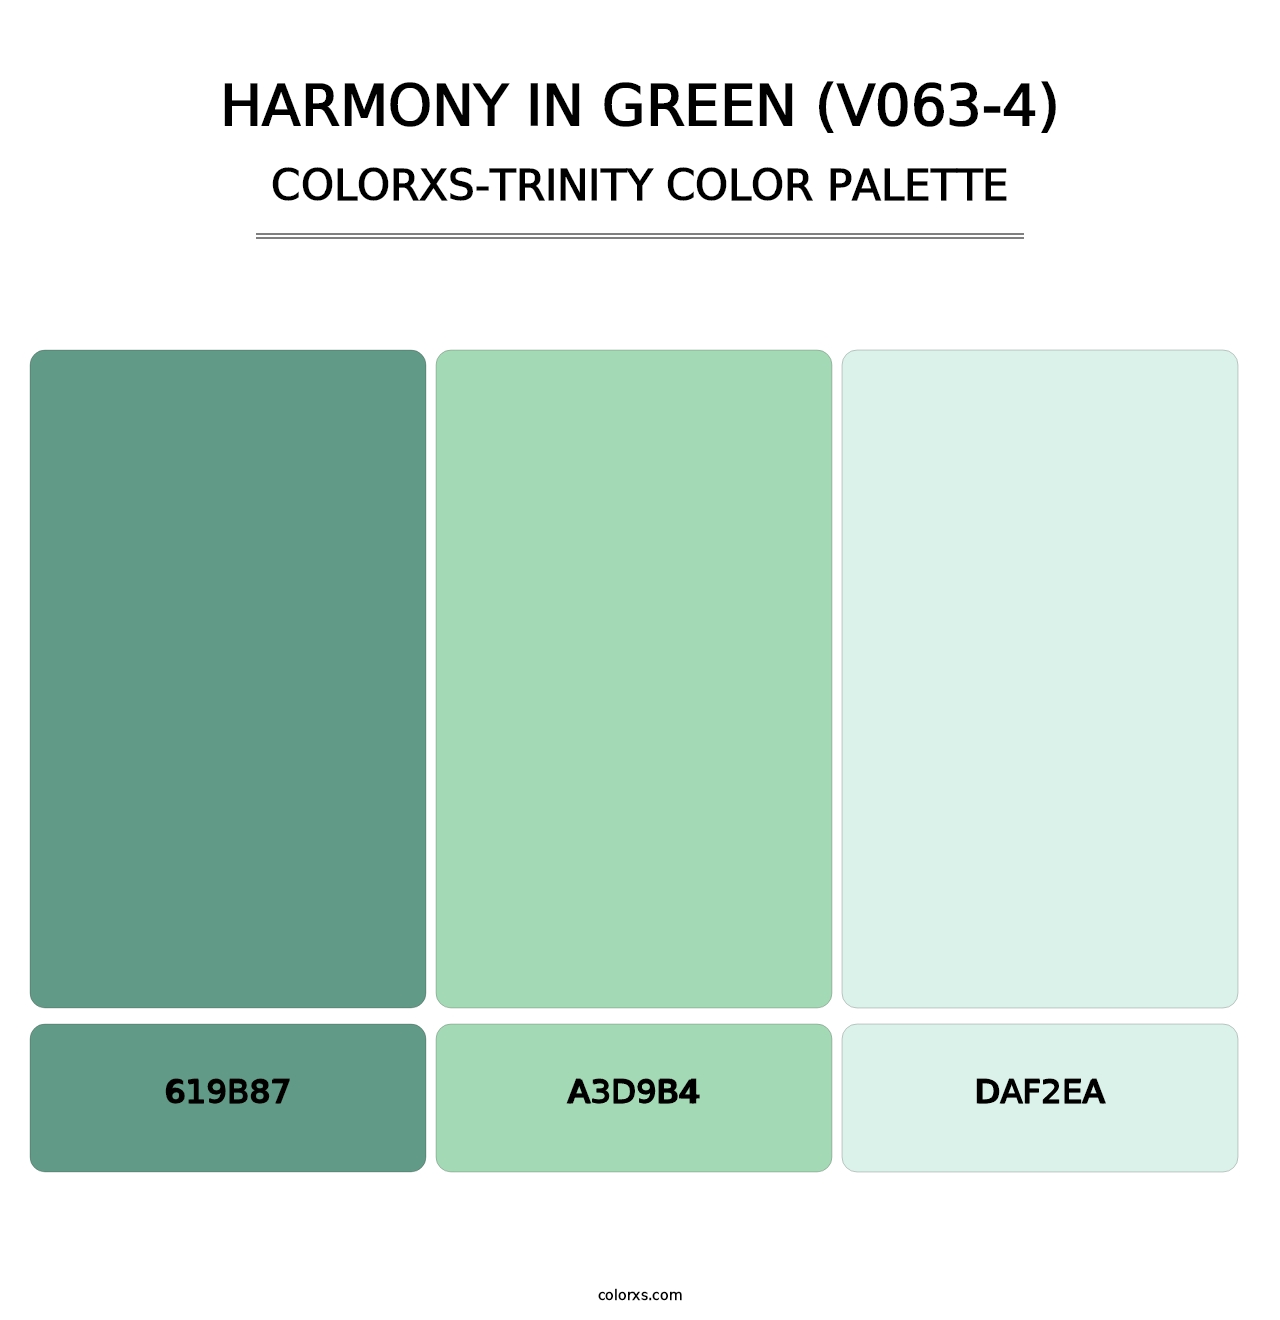 Harmony in Green (V063-4) - Colorxs Trinity Palette